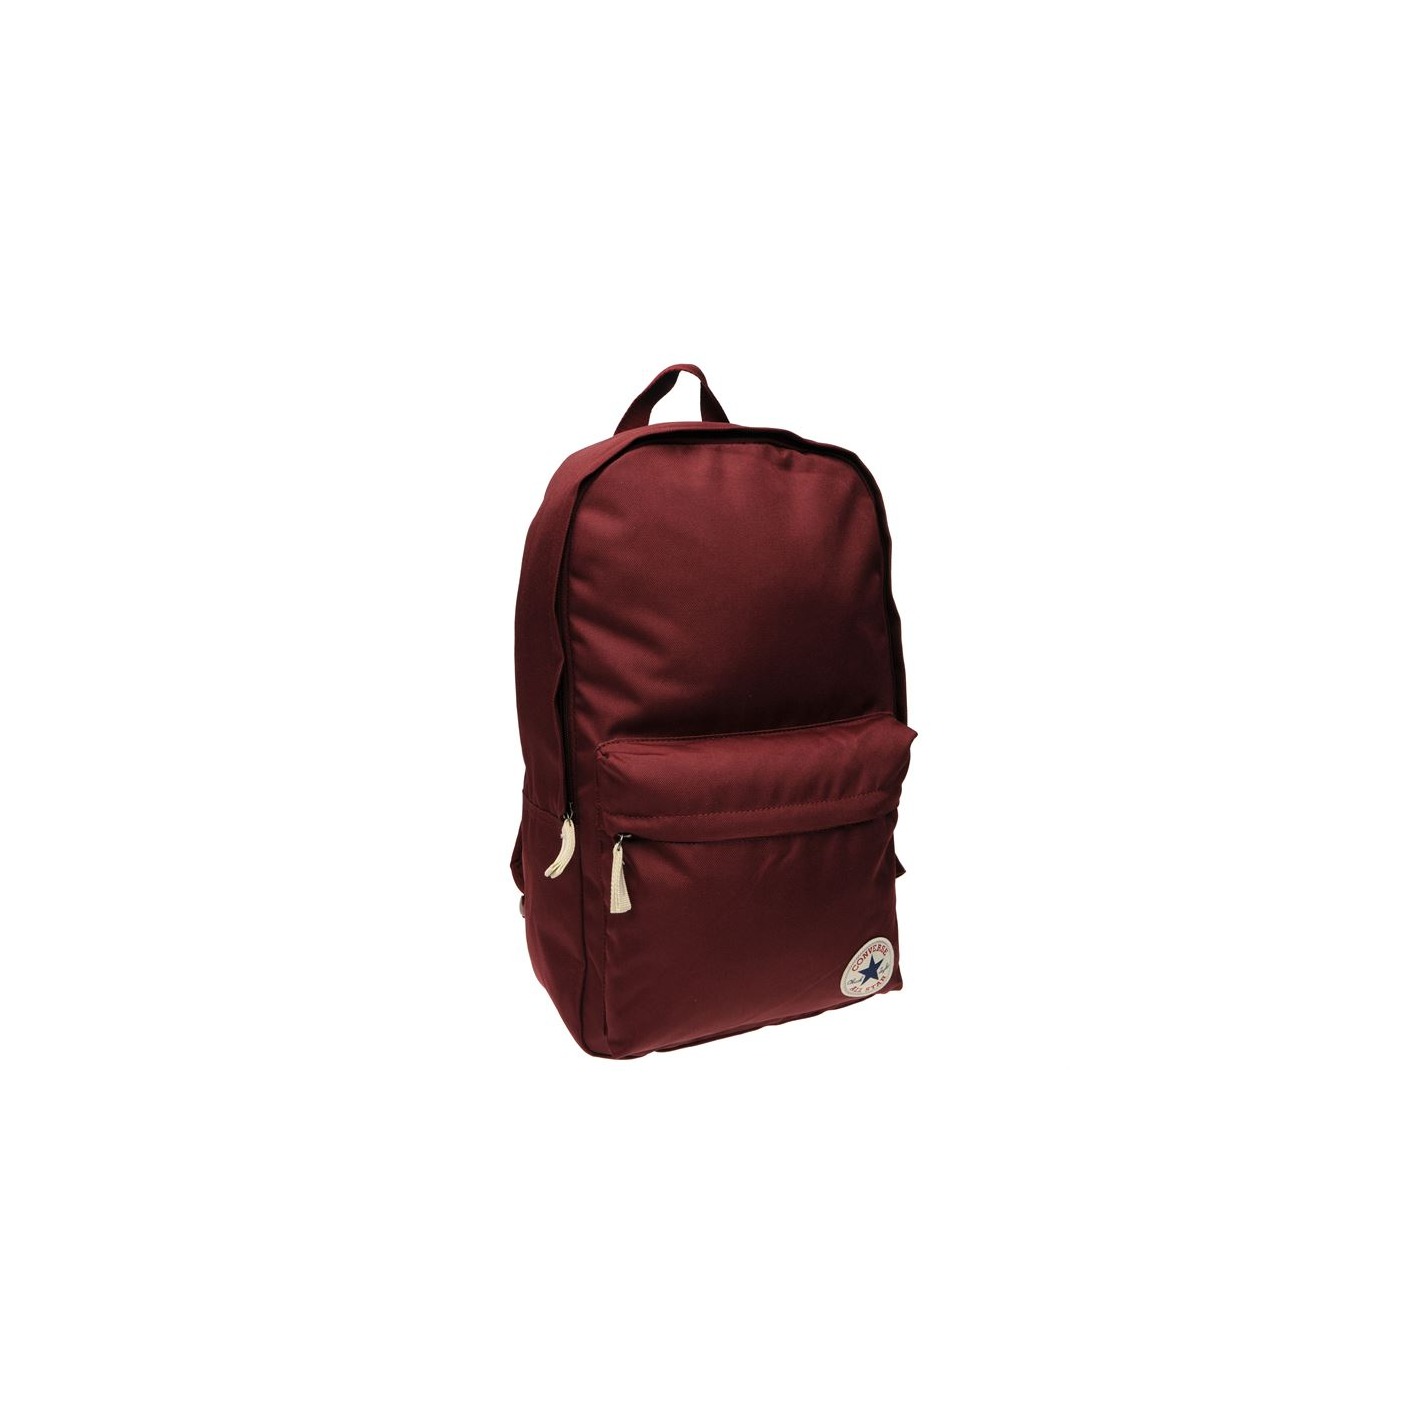 Backpack Converse Sport Burgundy - Babylonia